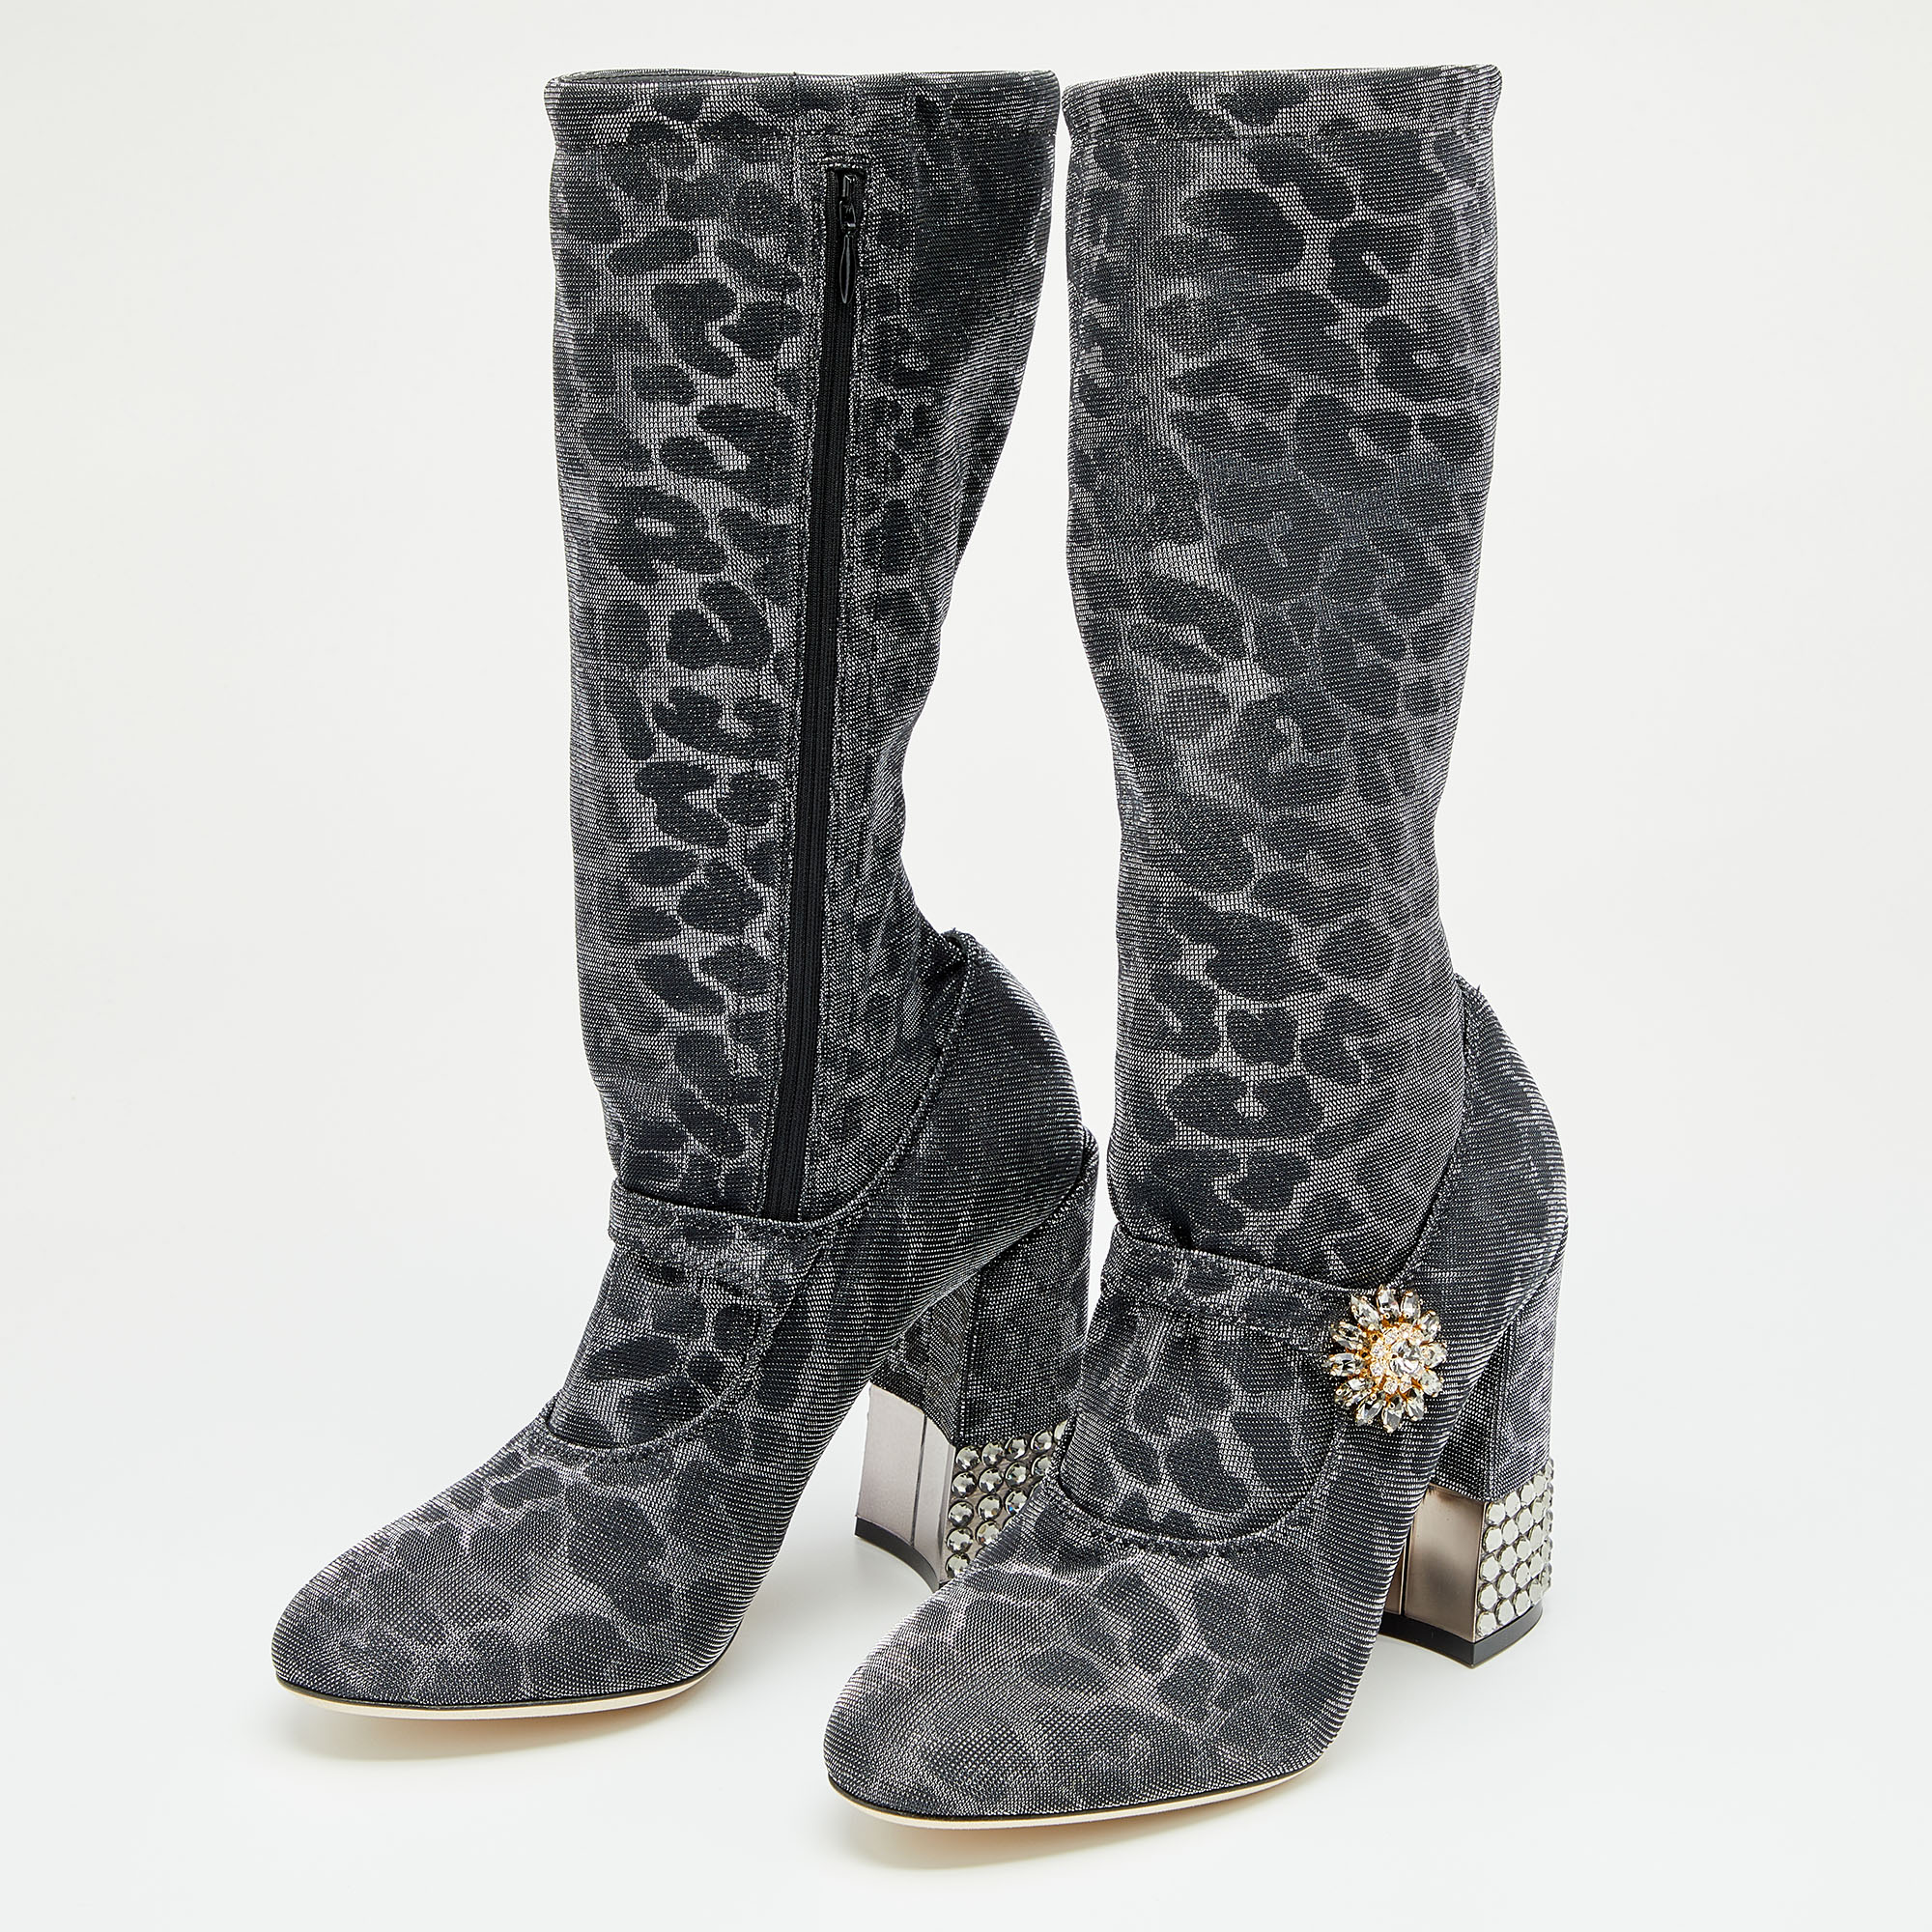 Dolce & Gabbana Metallic Silver Leopard Print Lurex Fabric Embellished Mary Jane Mid Calf Boots Size